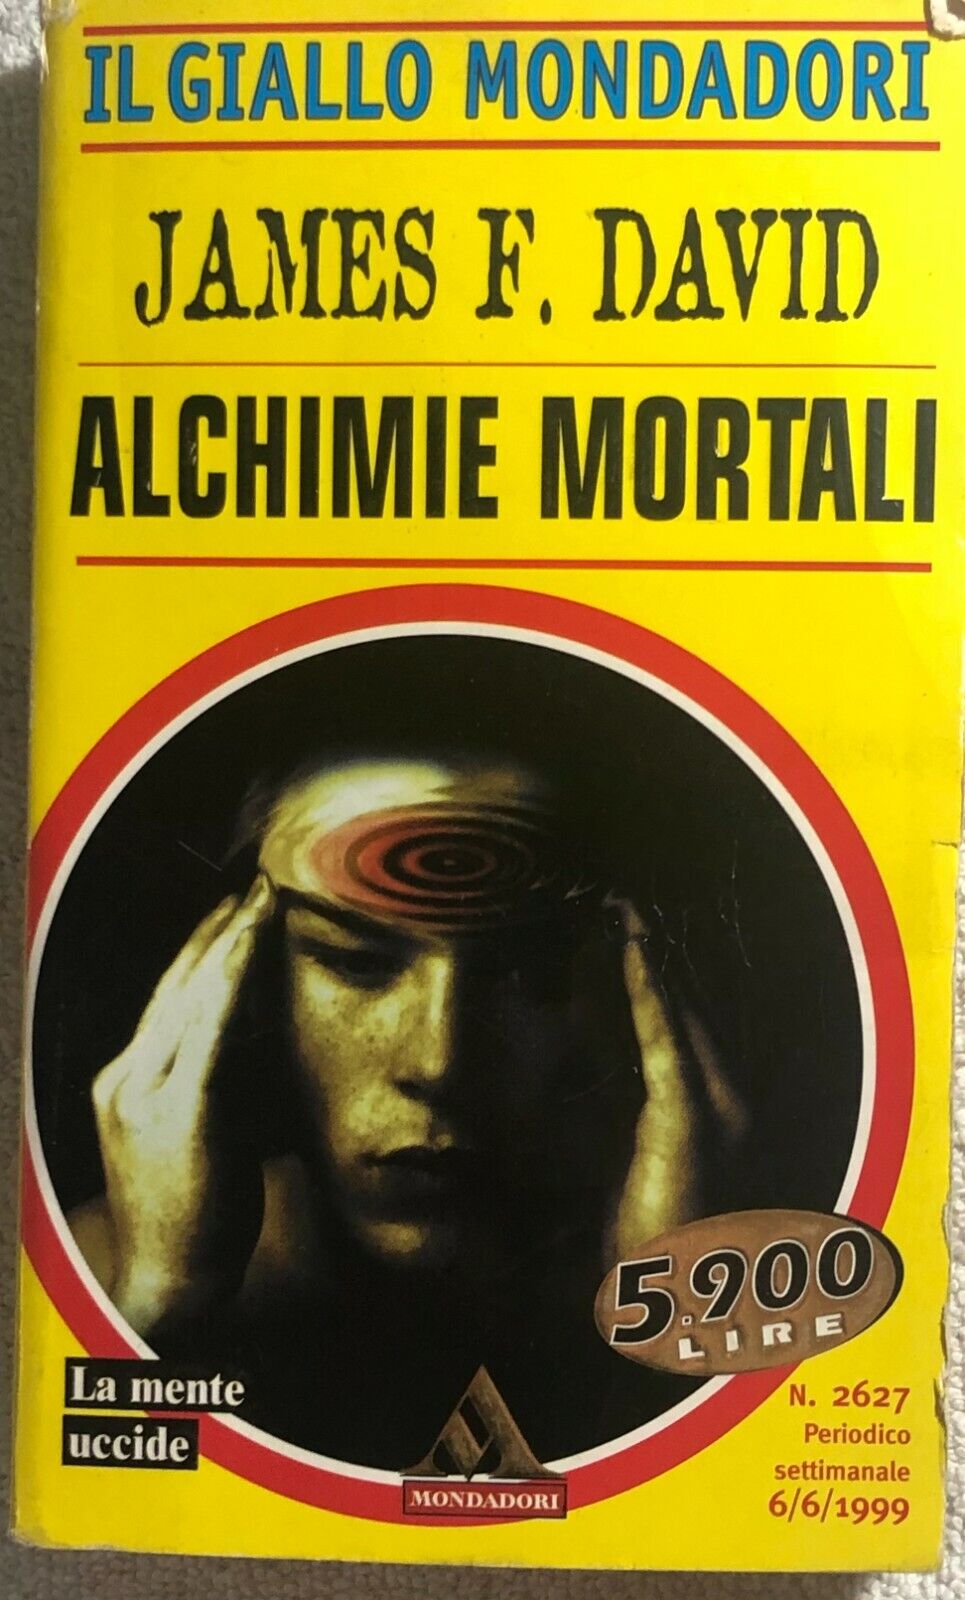 Alchimie mortali di James F. David,  1999,  Mondadori